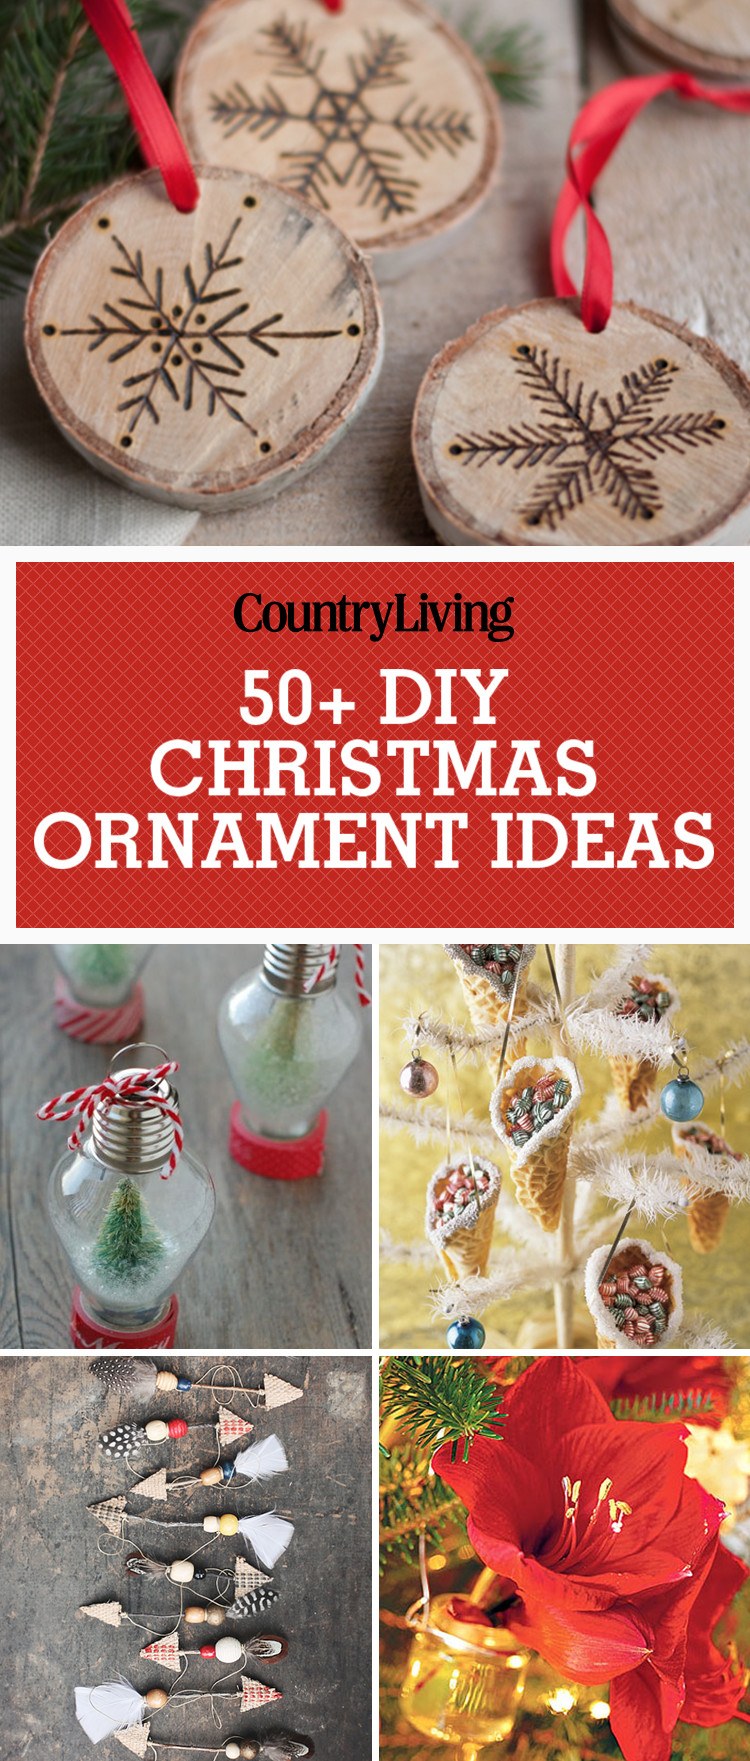 DIY Christmas Ornaments
 55 Homemade Christmas Ornaments DIY Crafts with